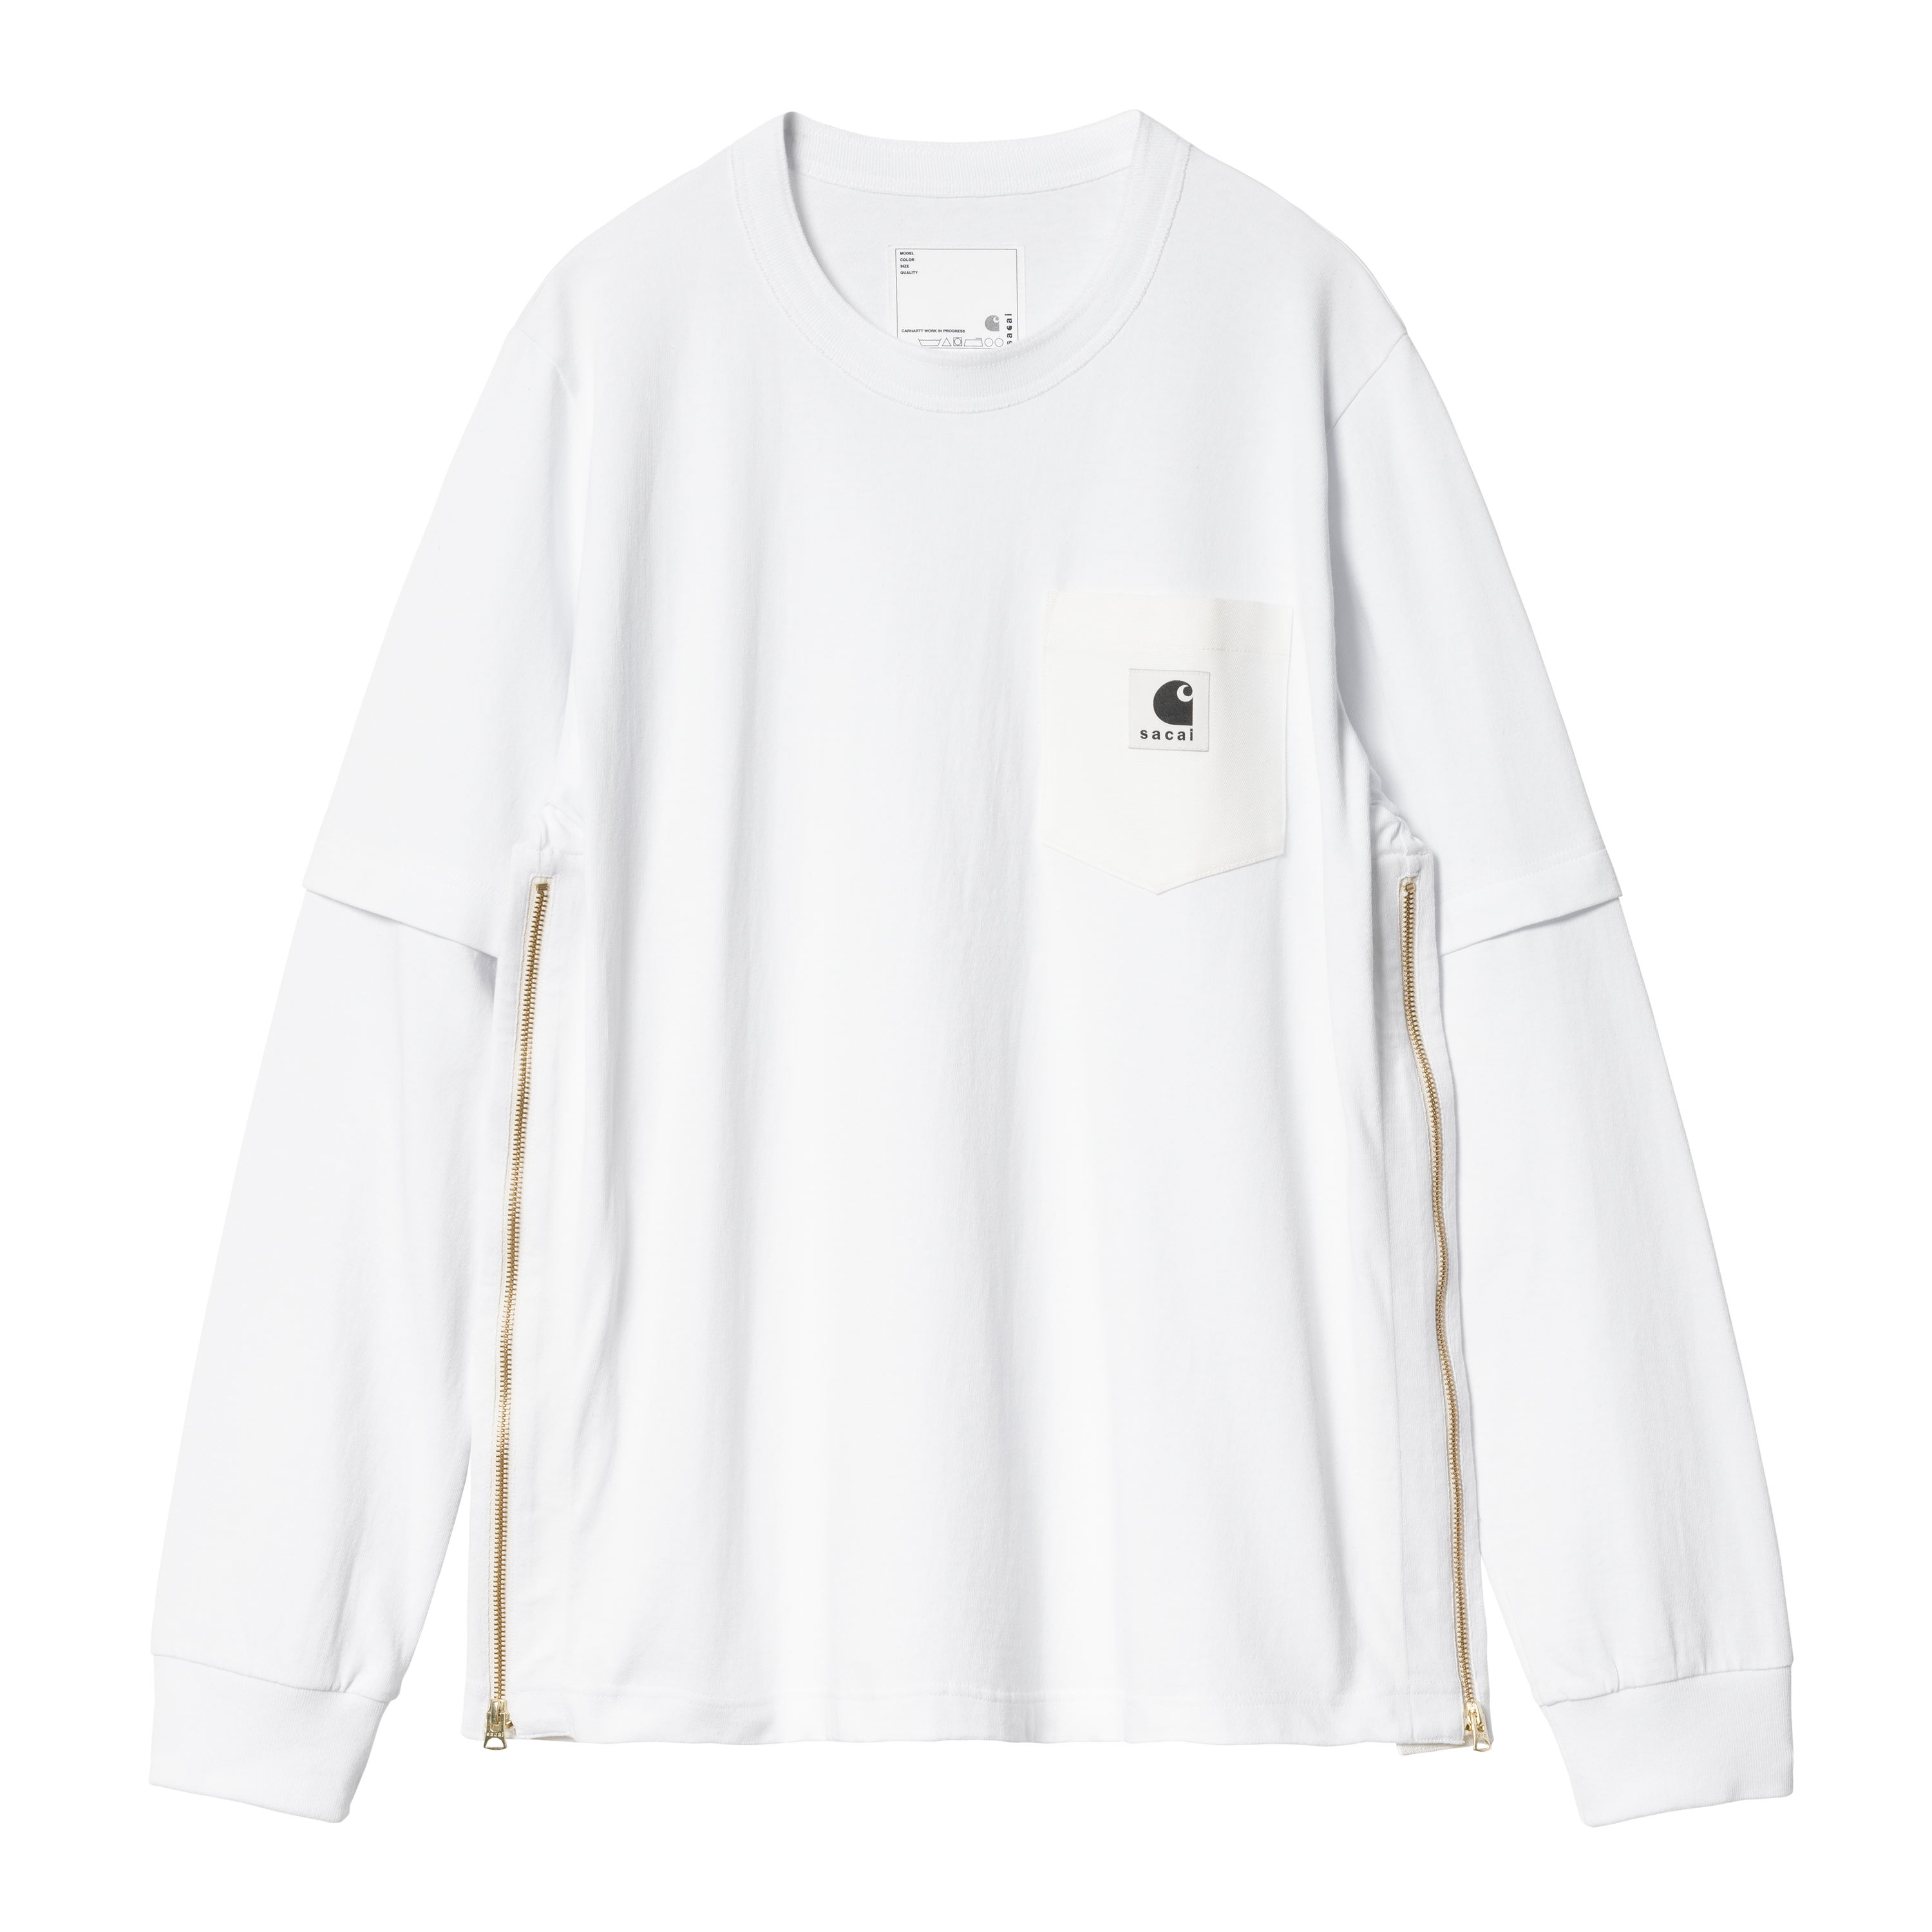 Carhartt WIP sacai x Carhartt WIP Long Sleeve T-Shirt in White